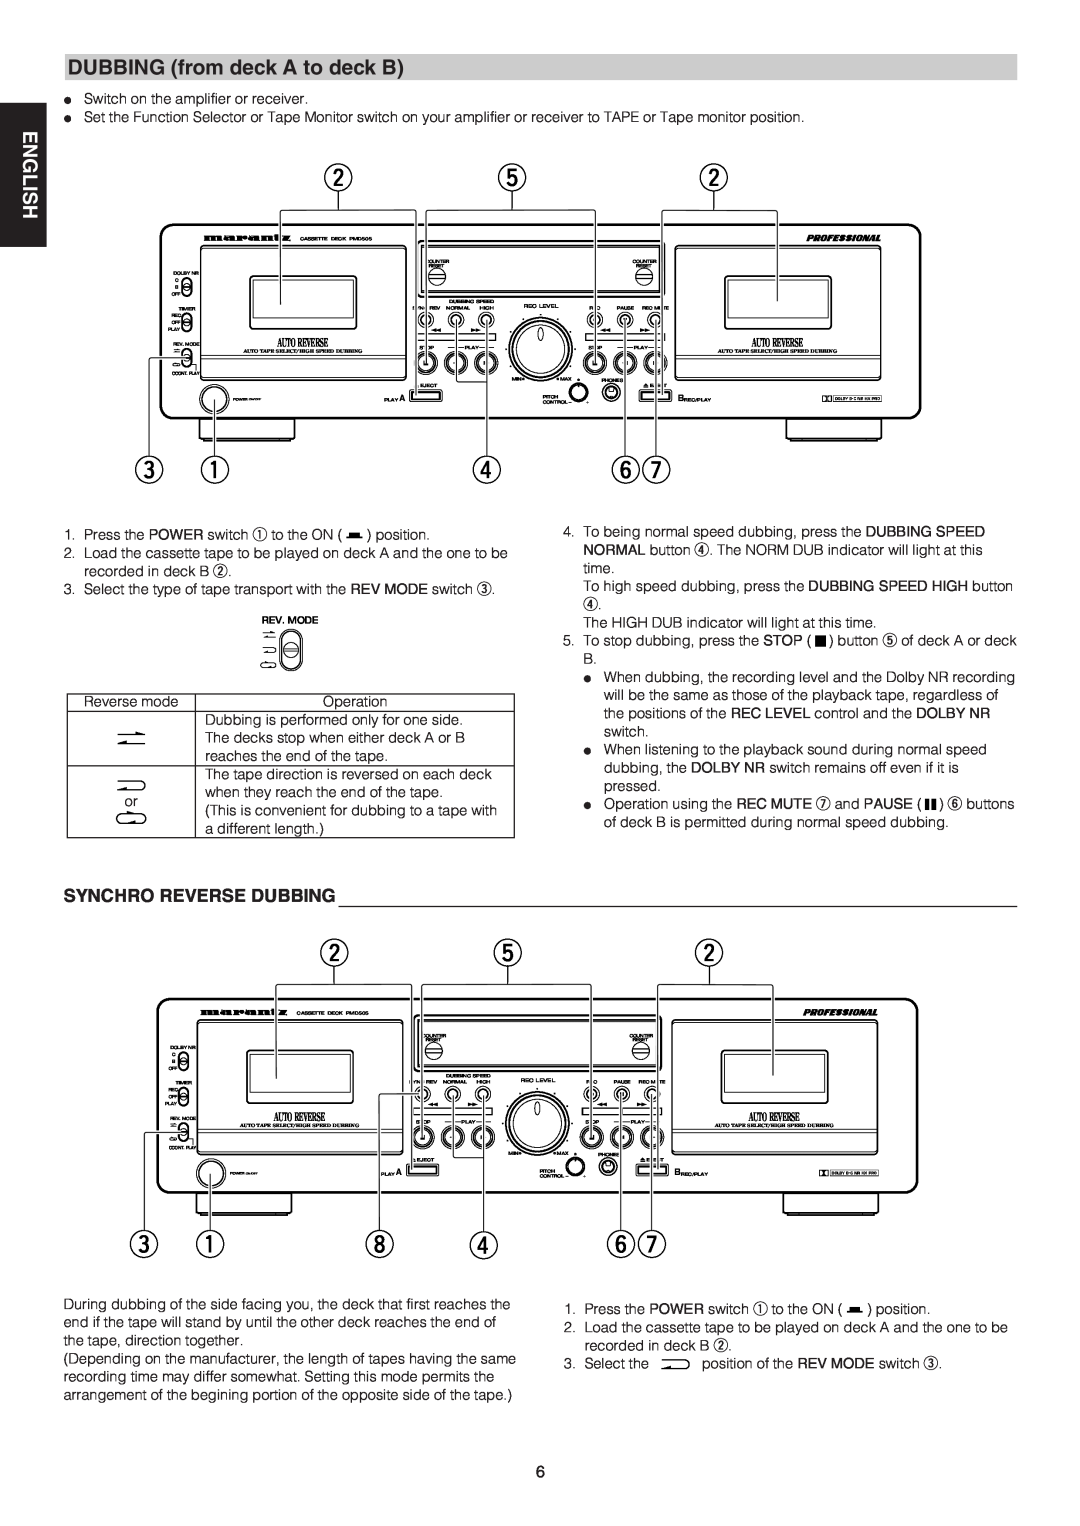 Marantz PMD505 manual DUBBING from deck A to deck B, Synchro Reverse Dubbing 